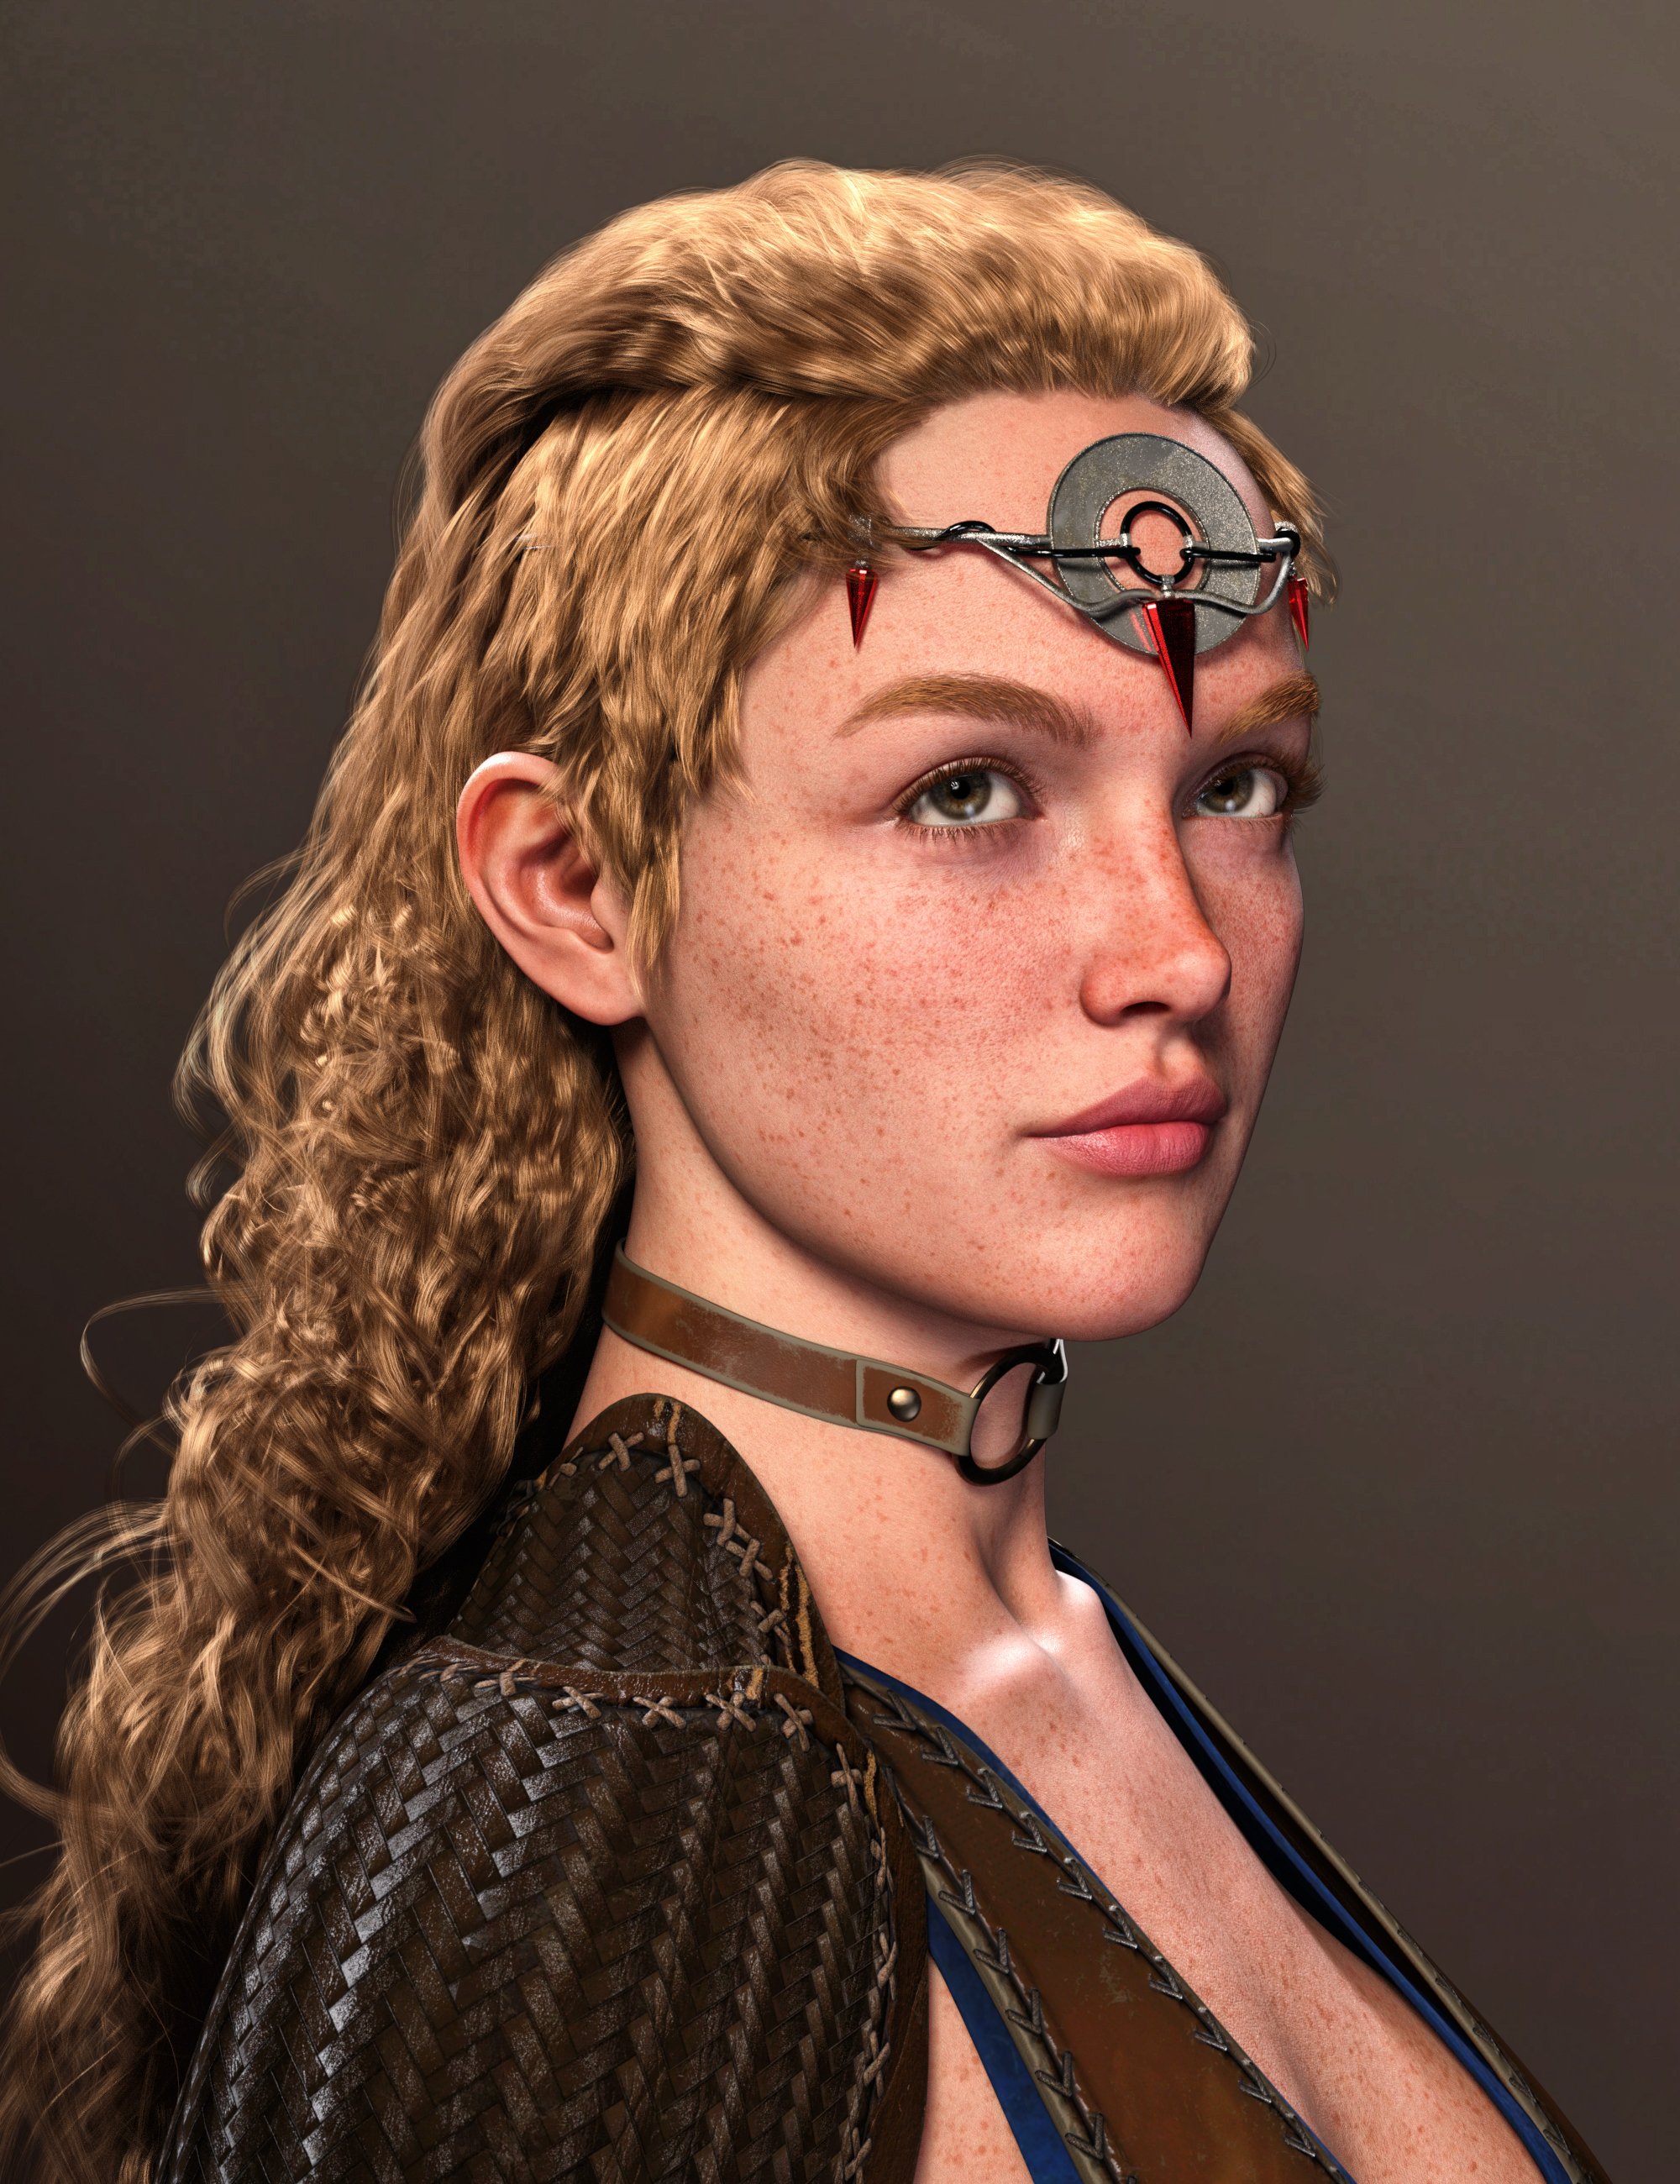 FE Viper Hair for Genesis 9 by: FeSoul, 3D Models by Daz 3D